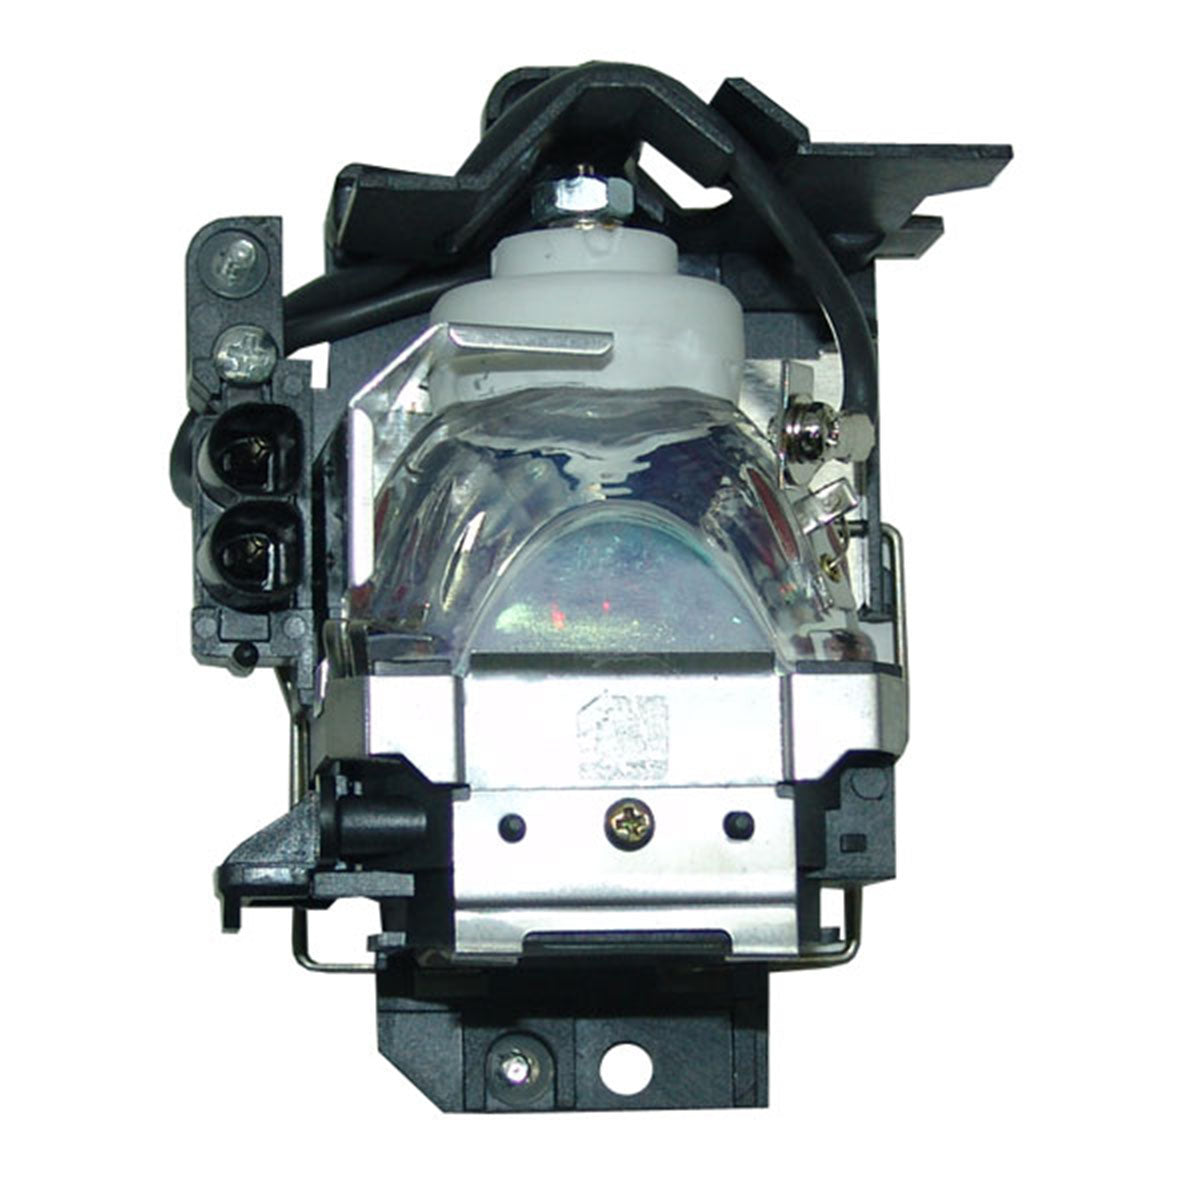 Sony LMP-C162 Compatible Projector Lamp Module